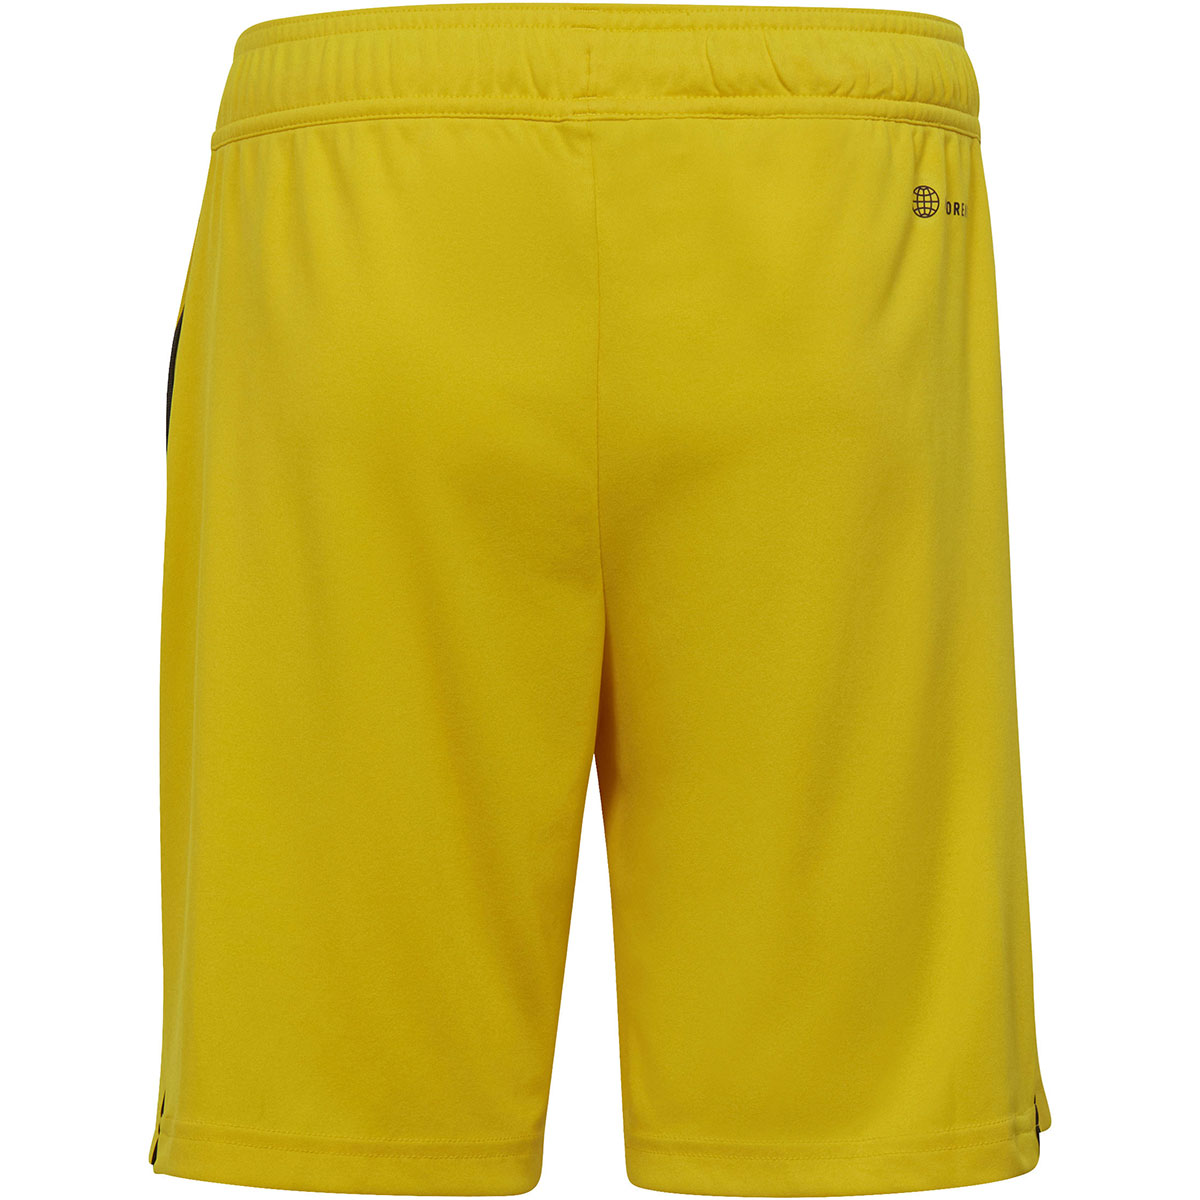 Adidas Kinder Shorts Tiro 23 gelb-schwarz